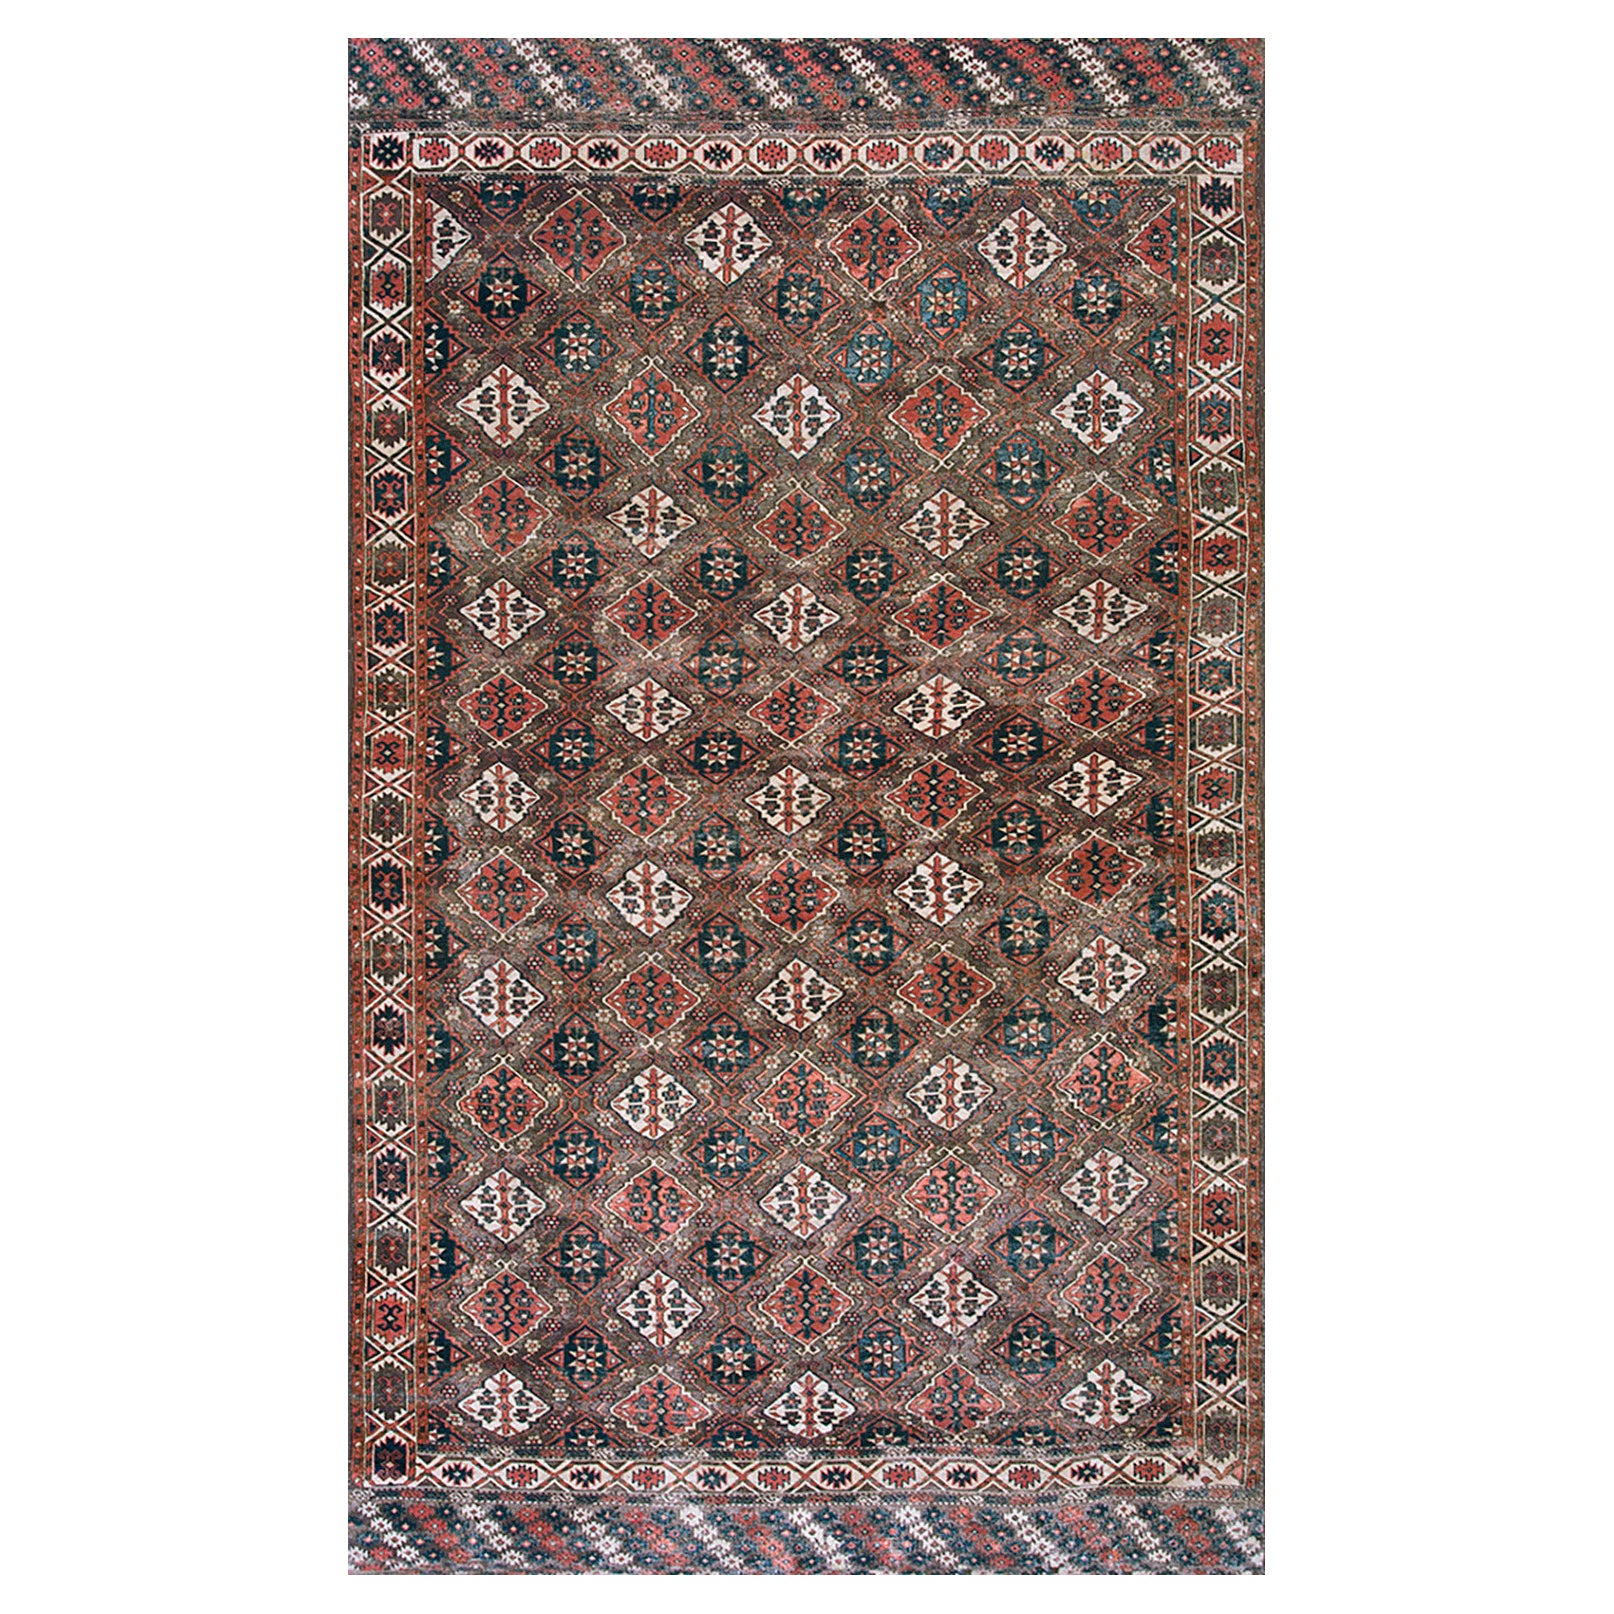 19th Century Central Asian Chodor Turkmen Carpet For Sale